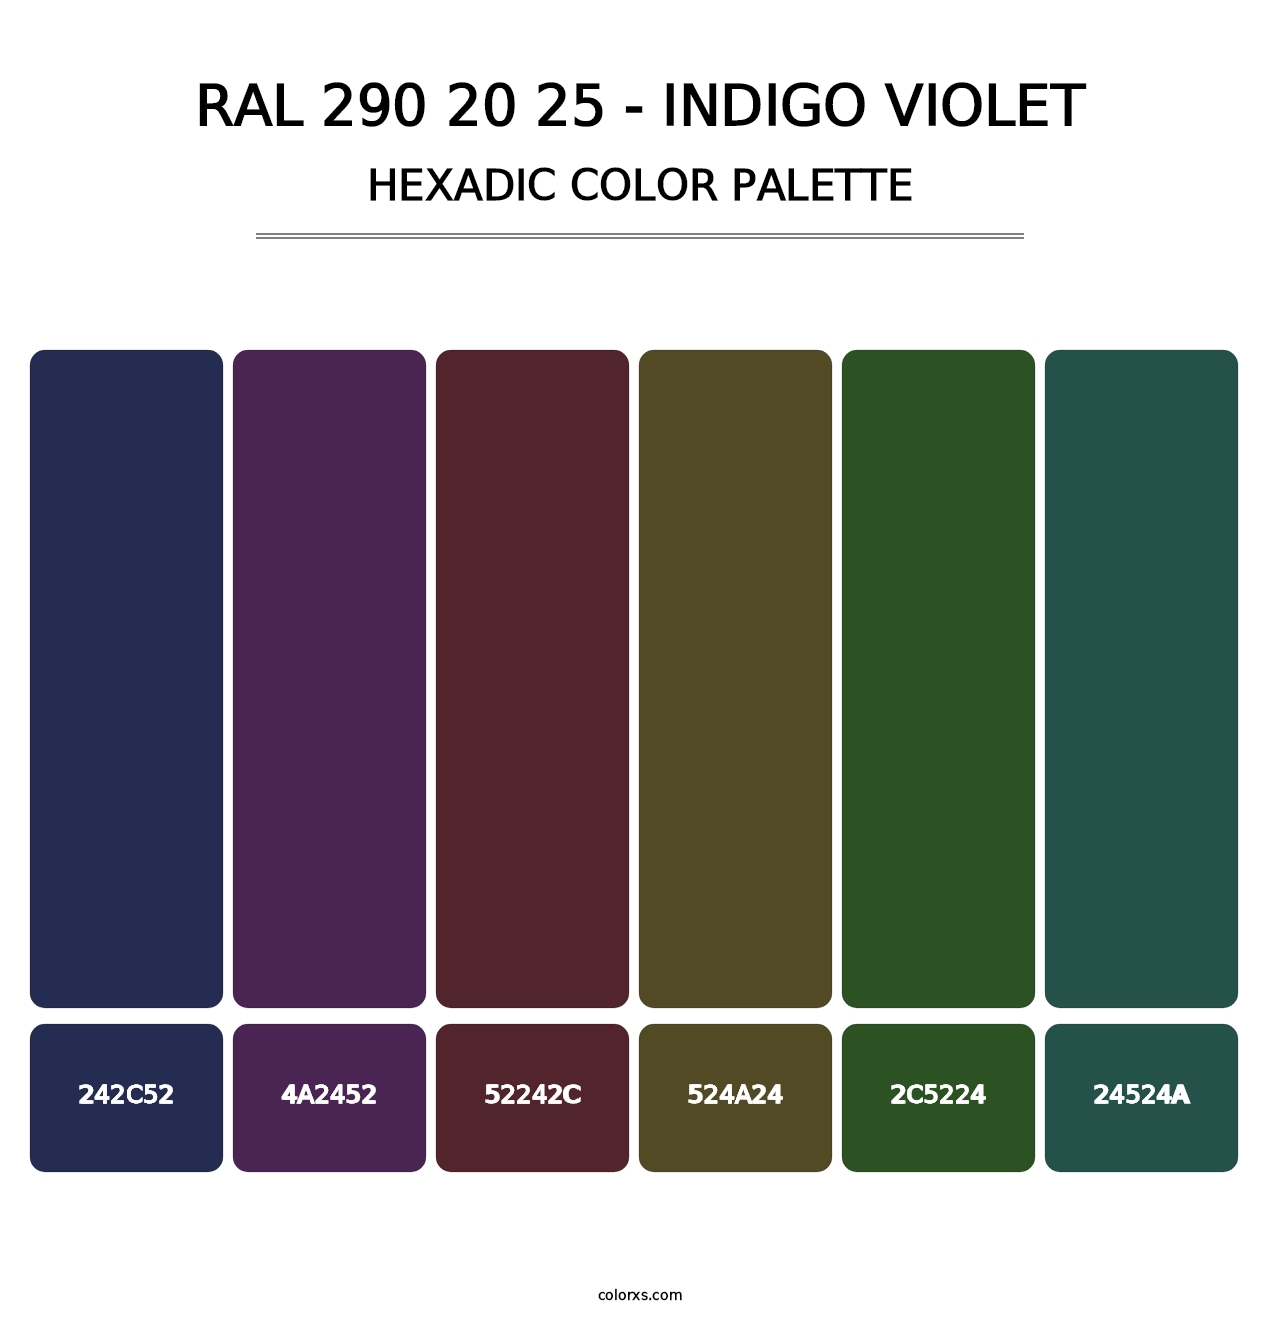 RAL 290 20 25 - Indigo Violet - Hexadic Color Palette